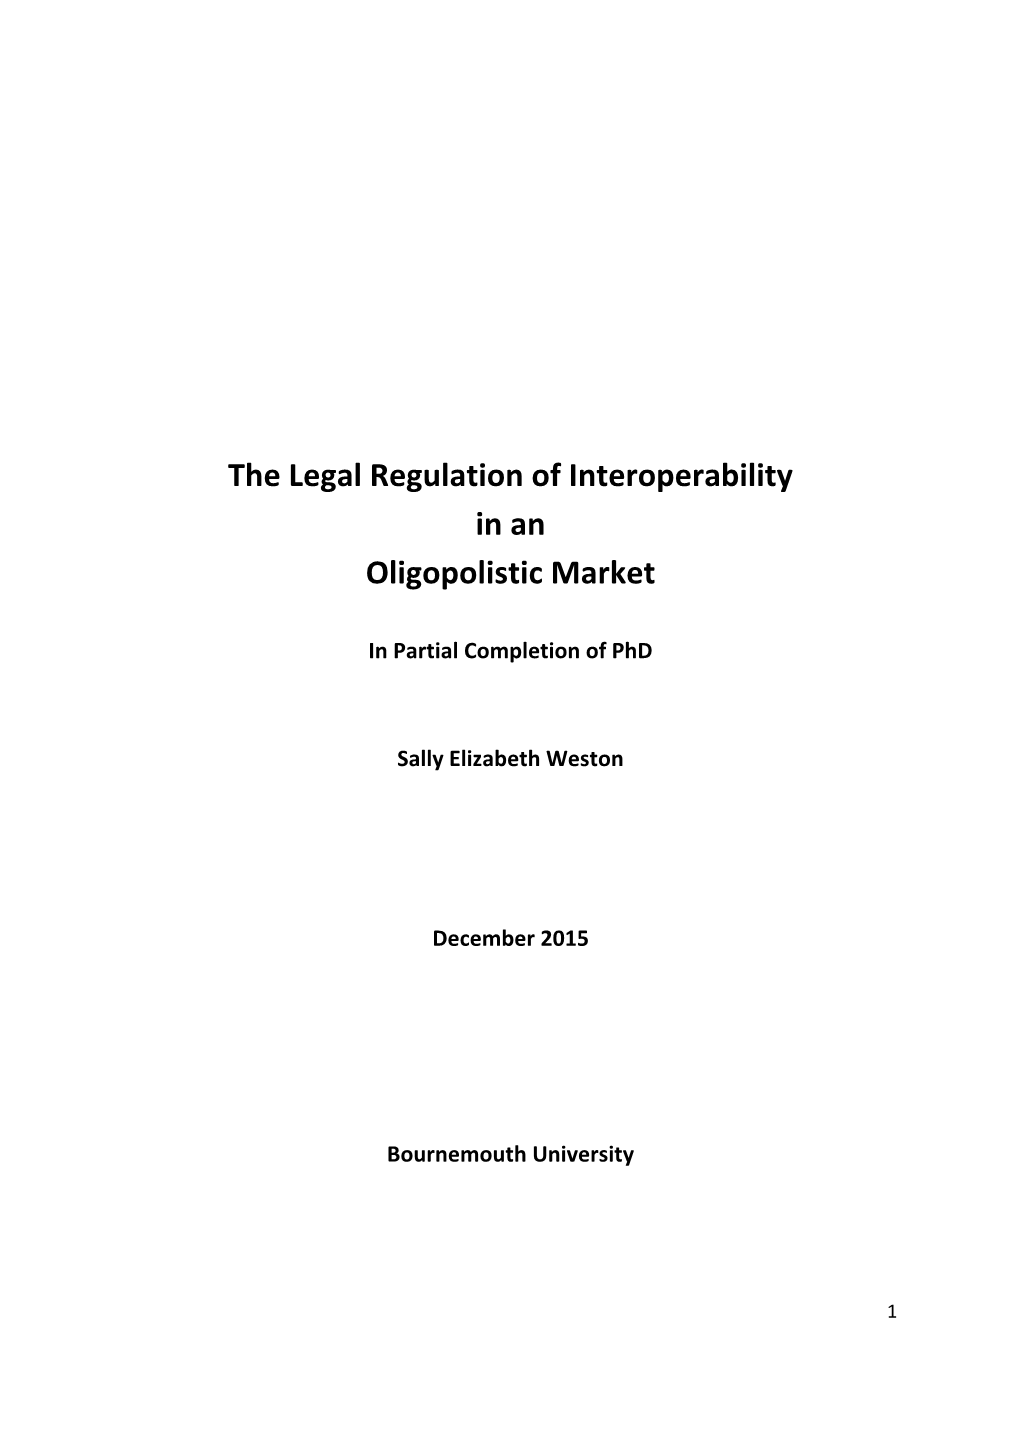 The Legal Regulation of Interoperability in an Oligopolistic Market